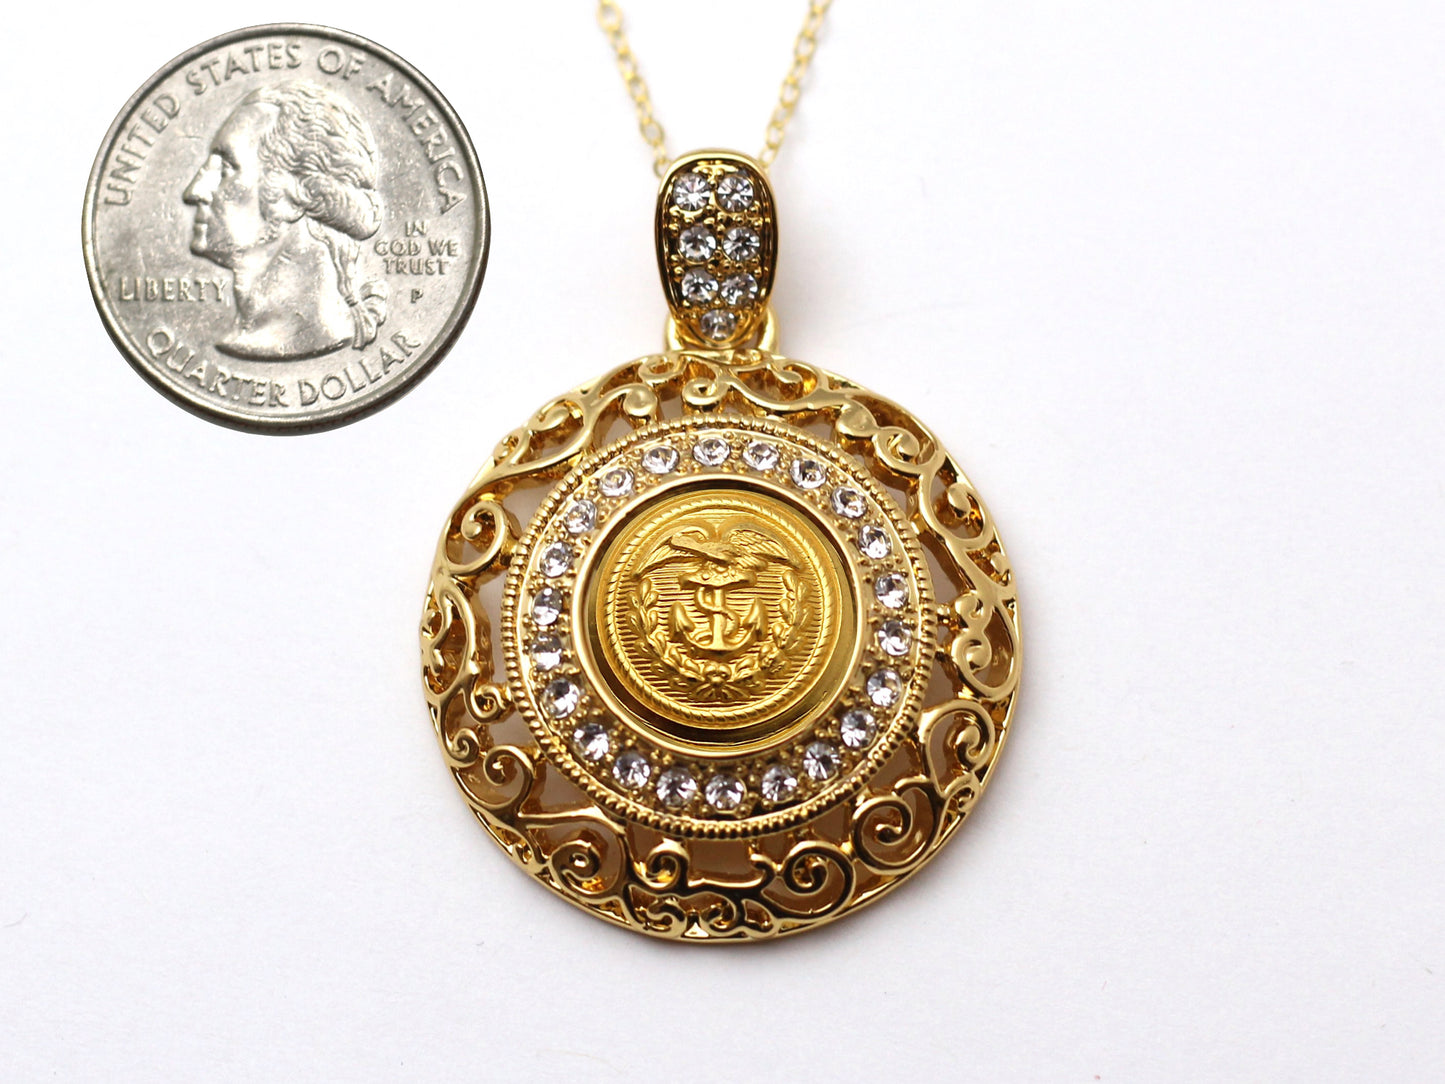 Coast Guard Button Necklace - Large Gold Rhinestone Pendant